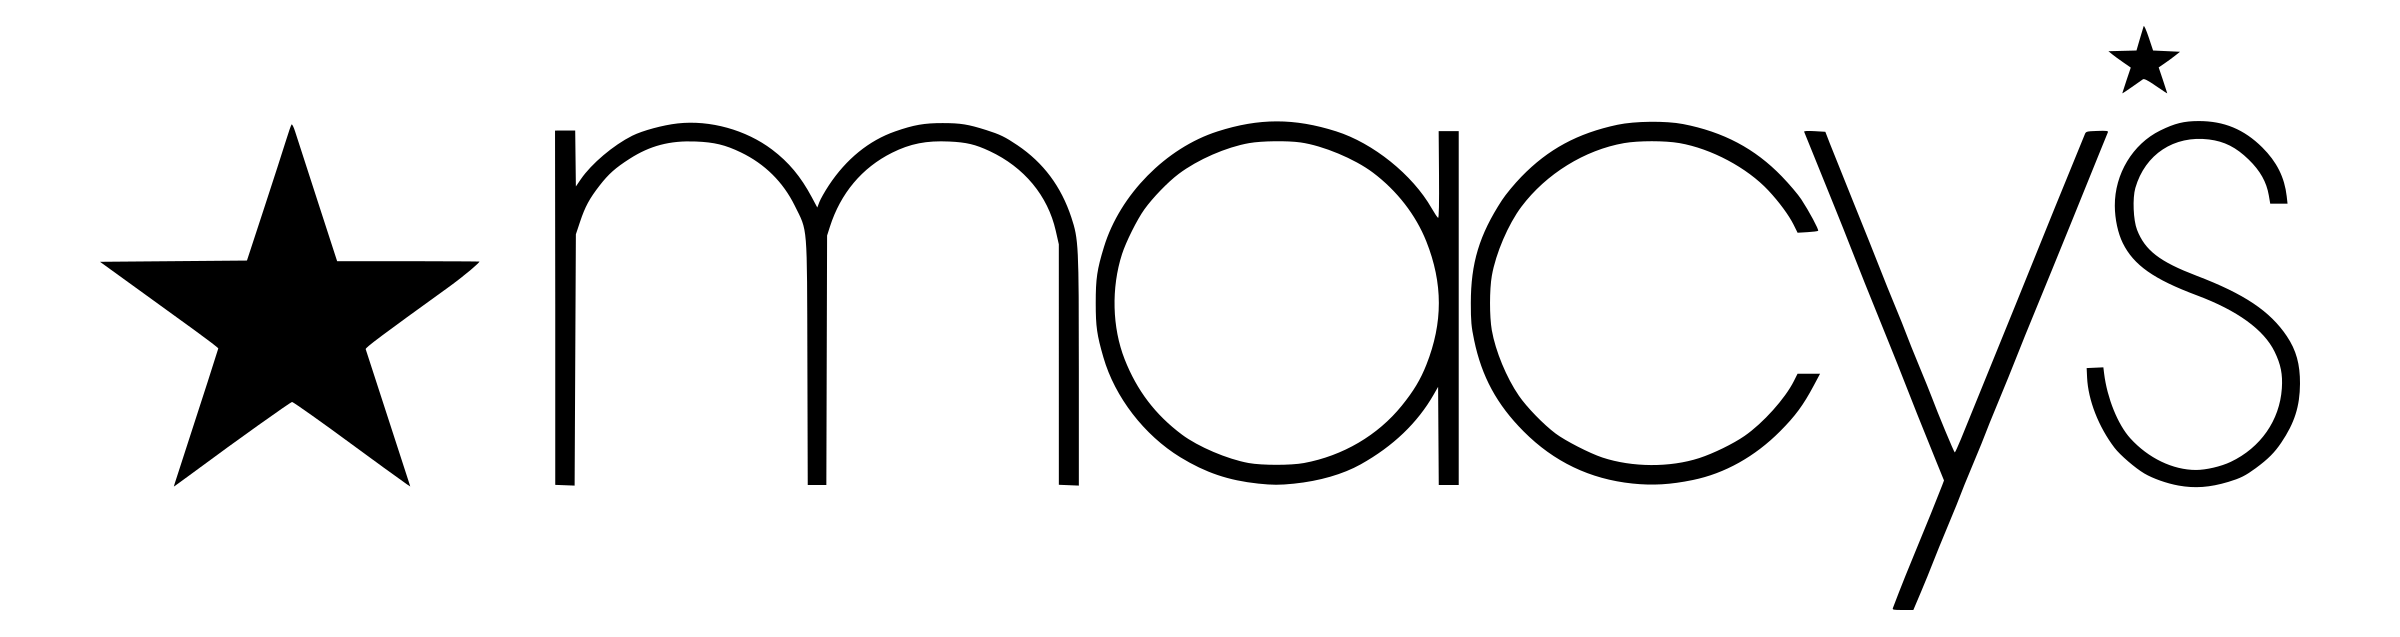 macys-logo-black